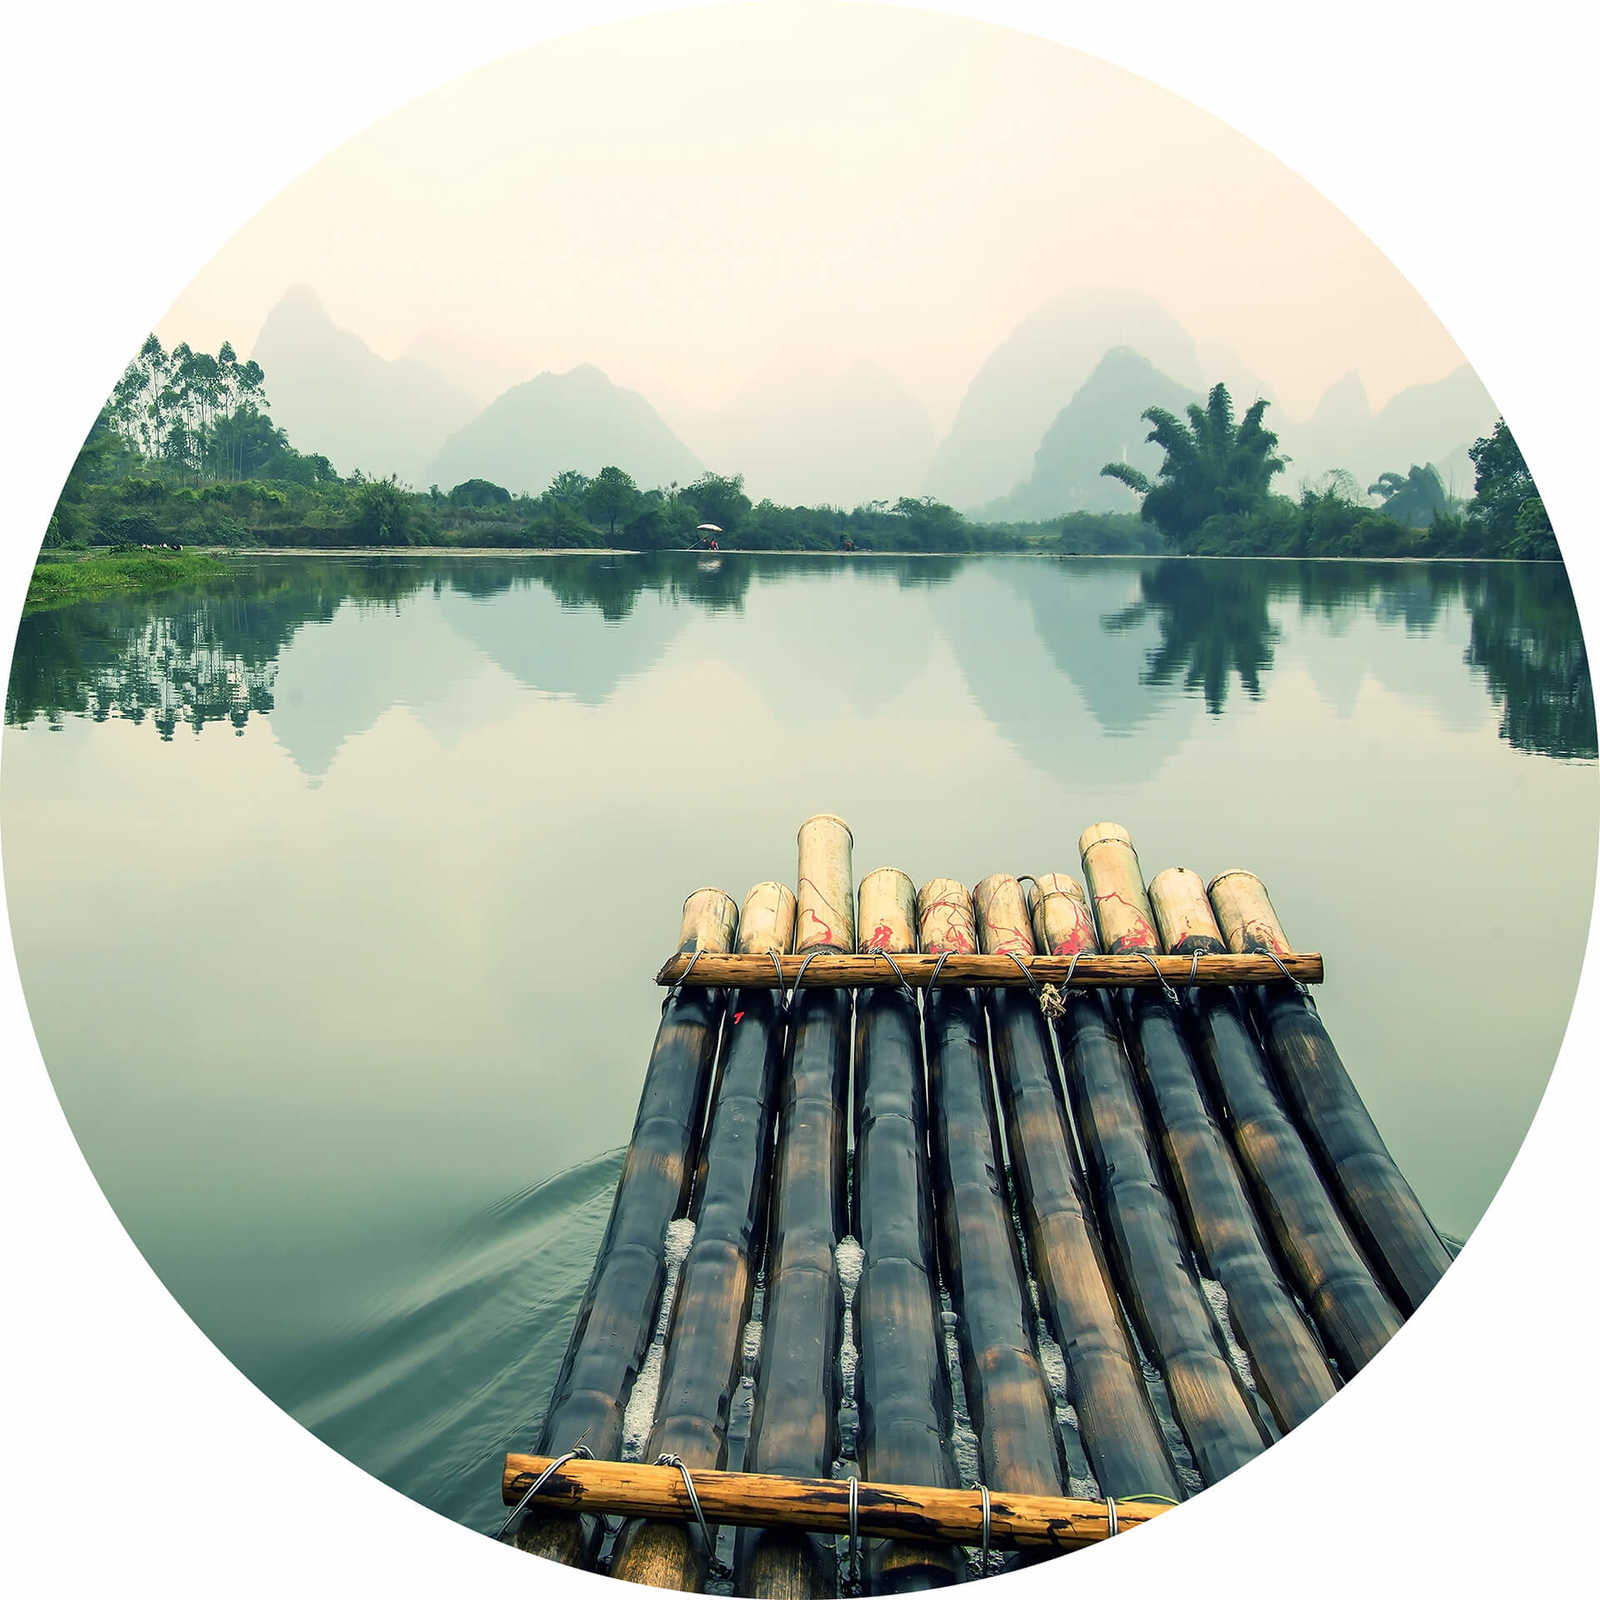         Photo wallpaper round raft trip in China
    